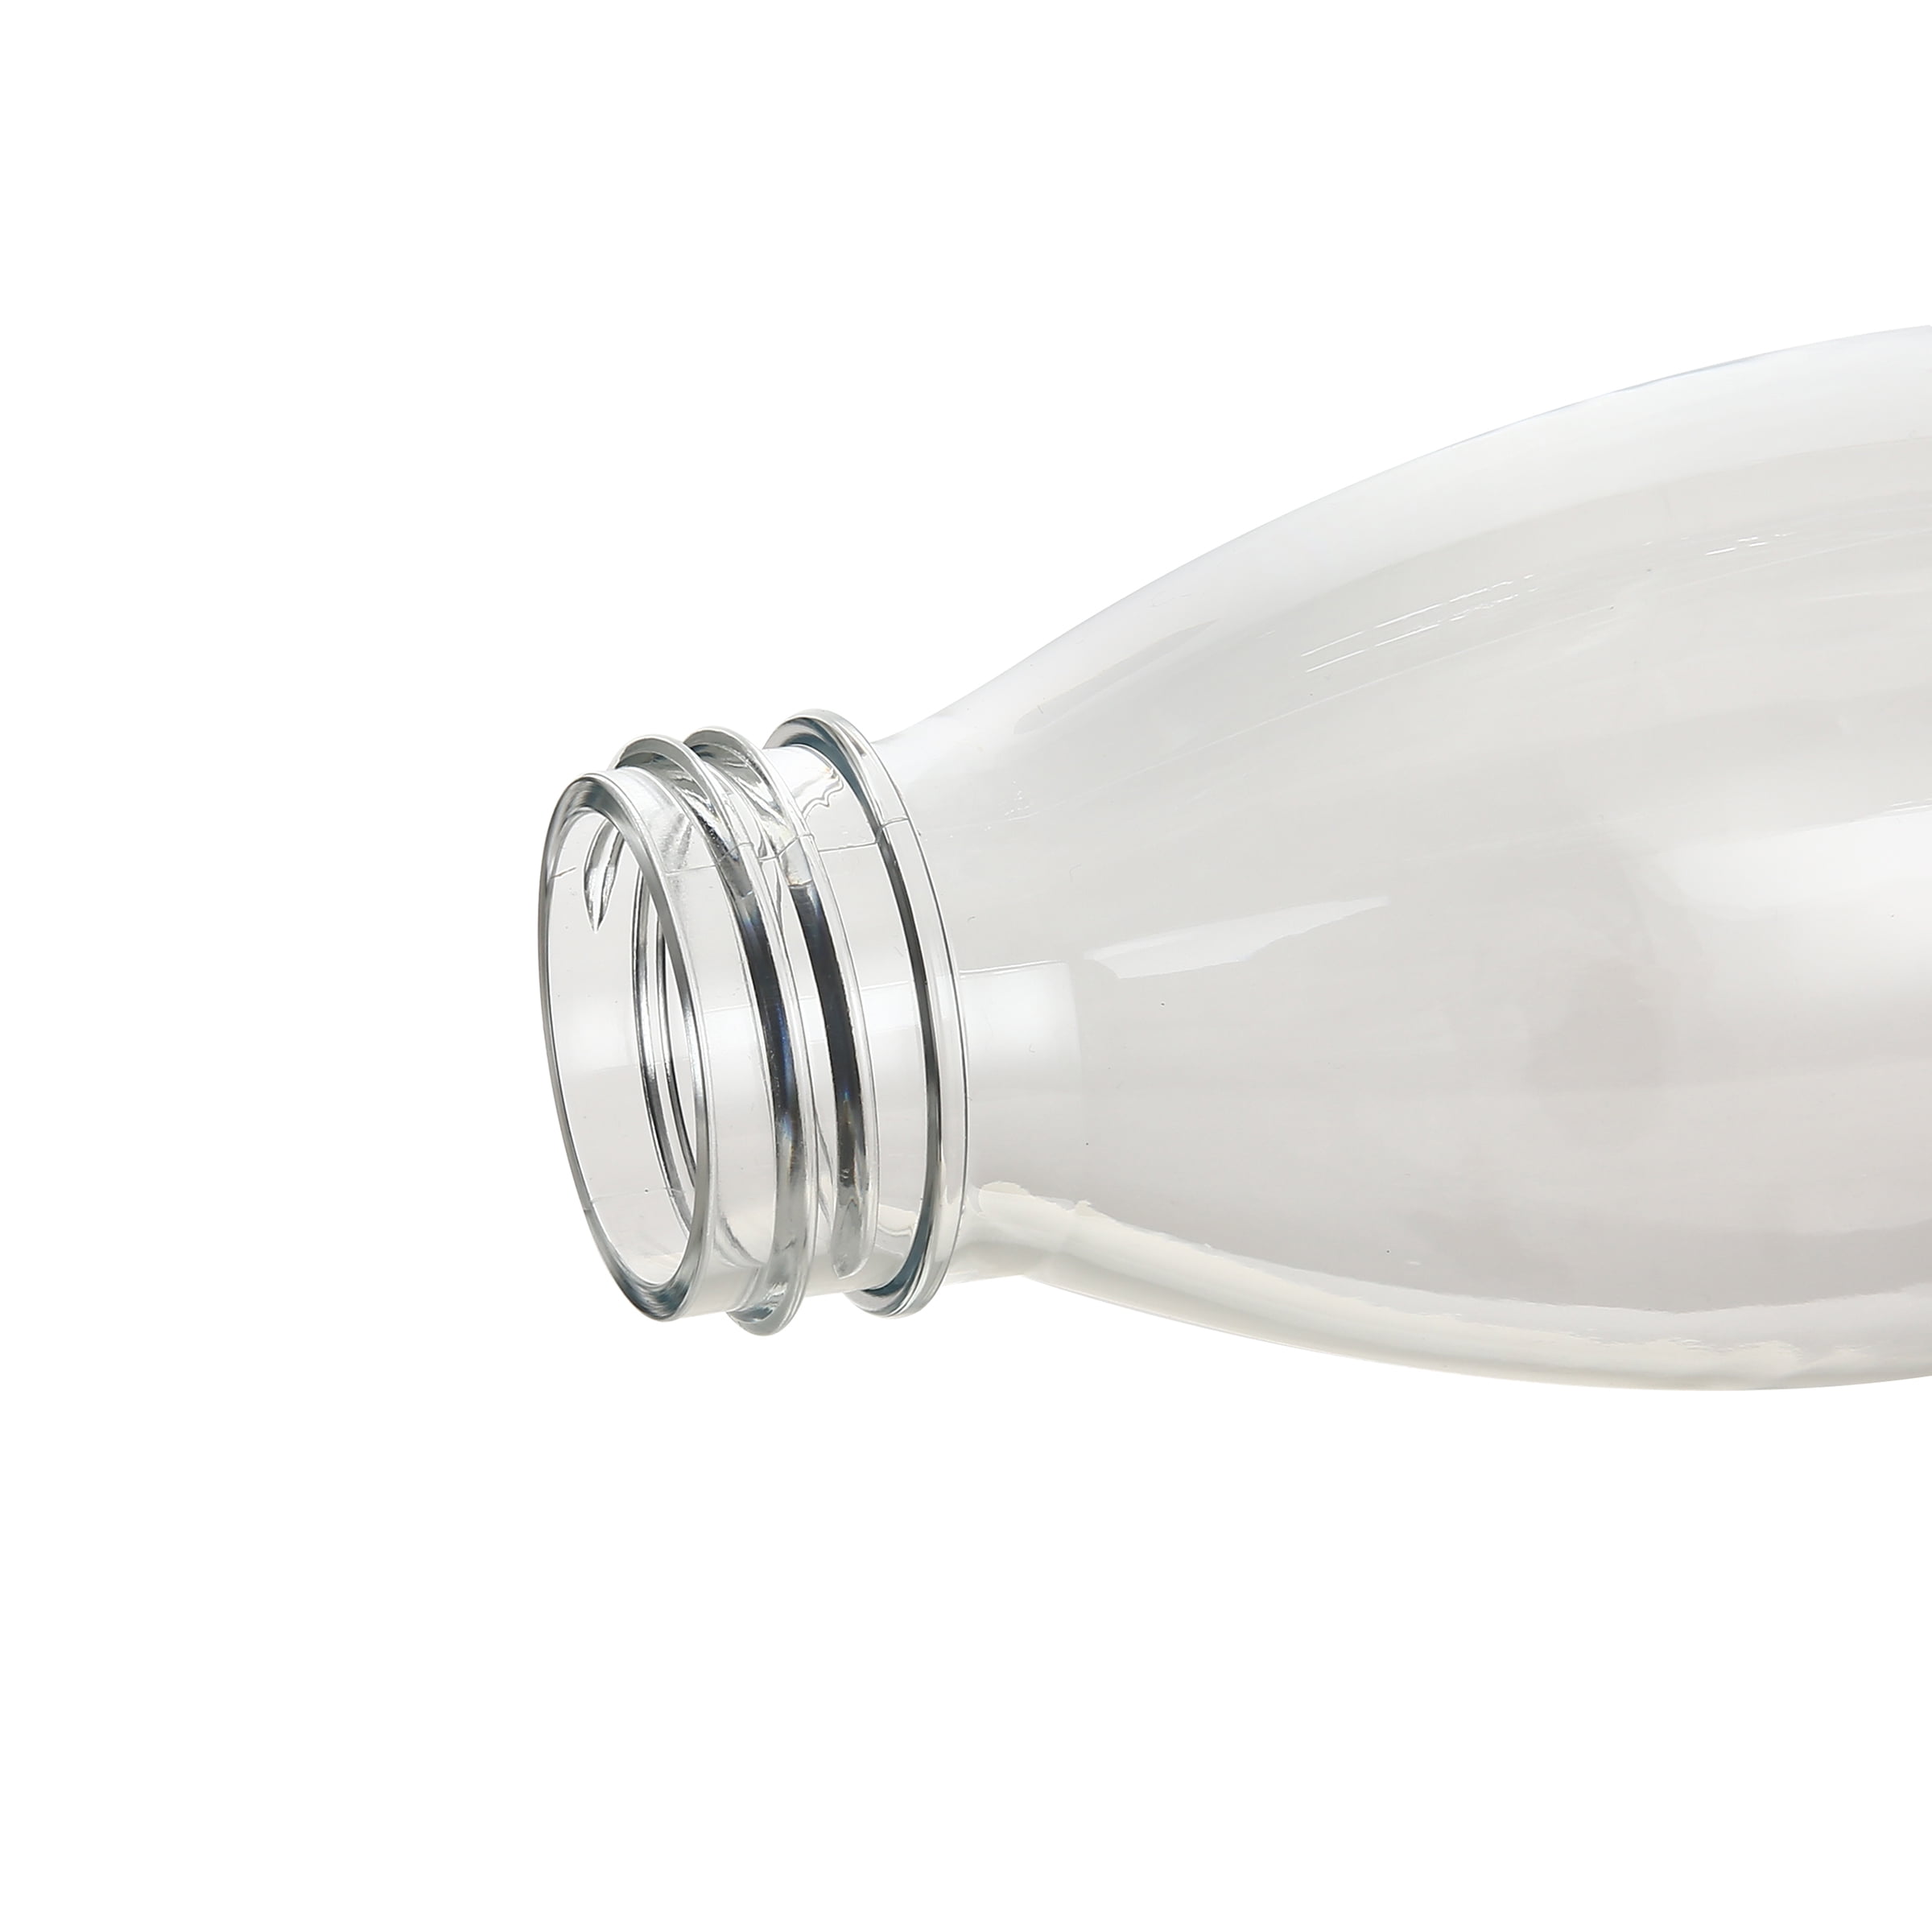 Sweda Clear Plastic Water Bottles Bulk - Sports Water Bottles - 22